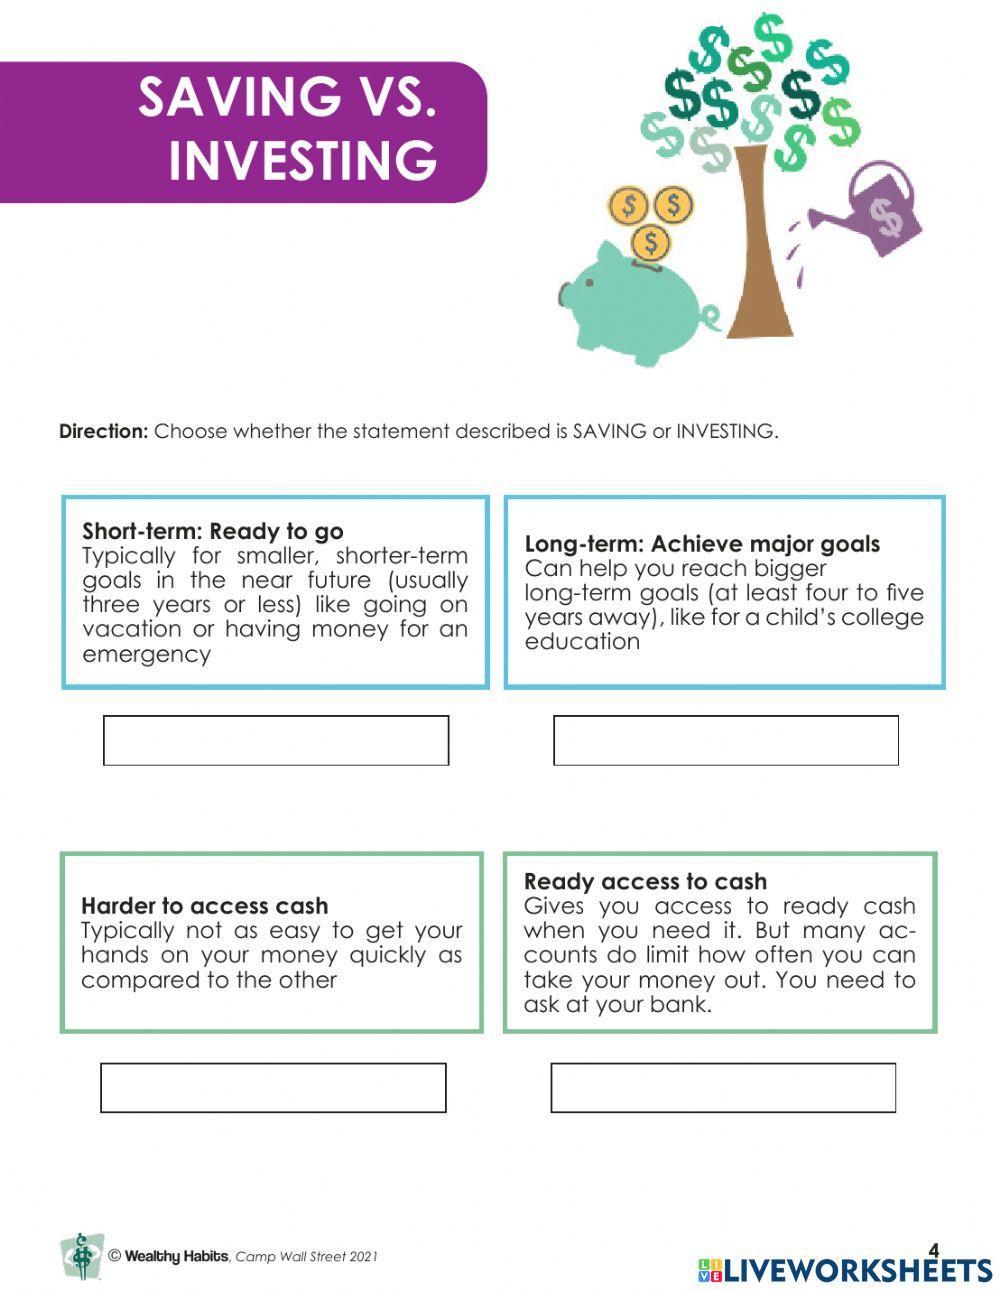 Wealthy Habits Saving vs Investing CWS